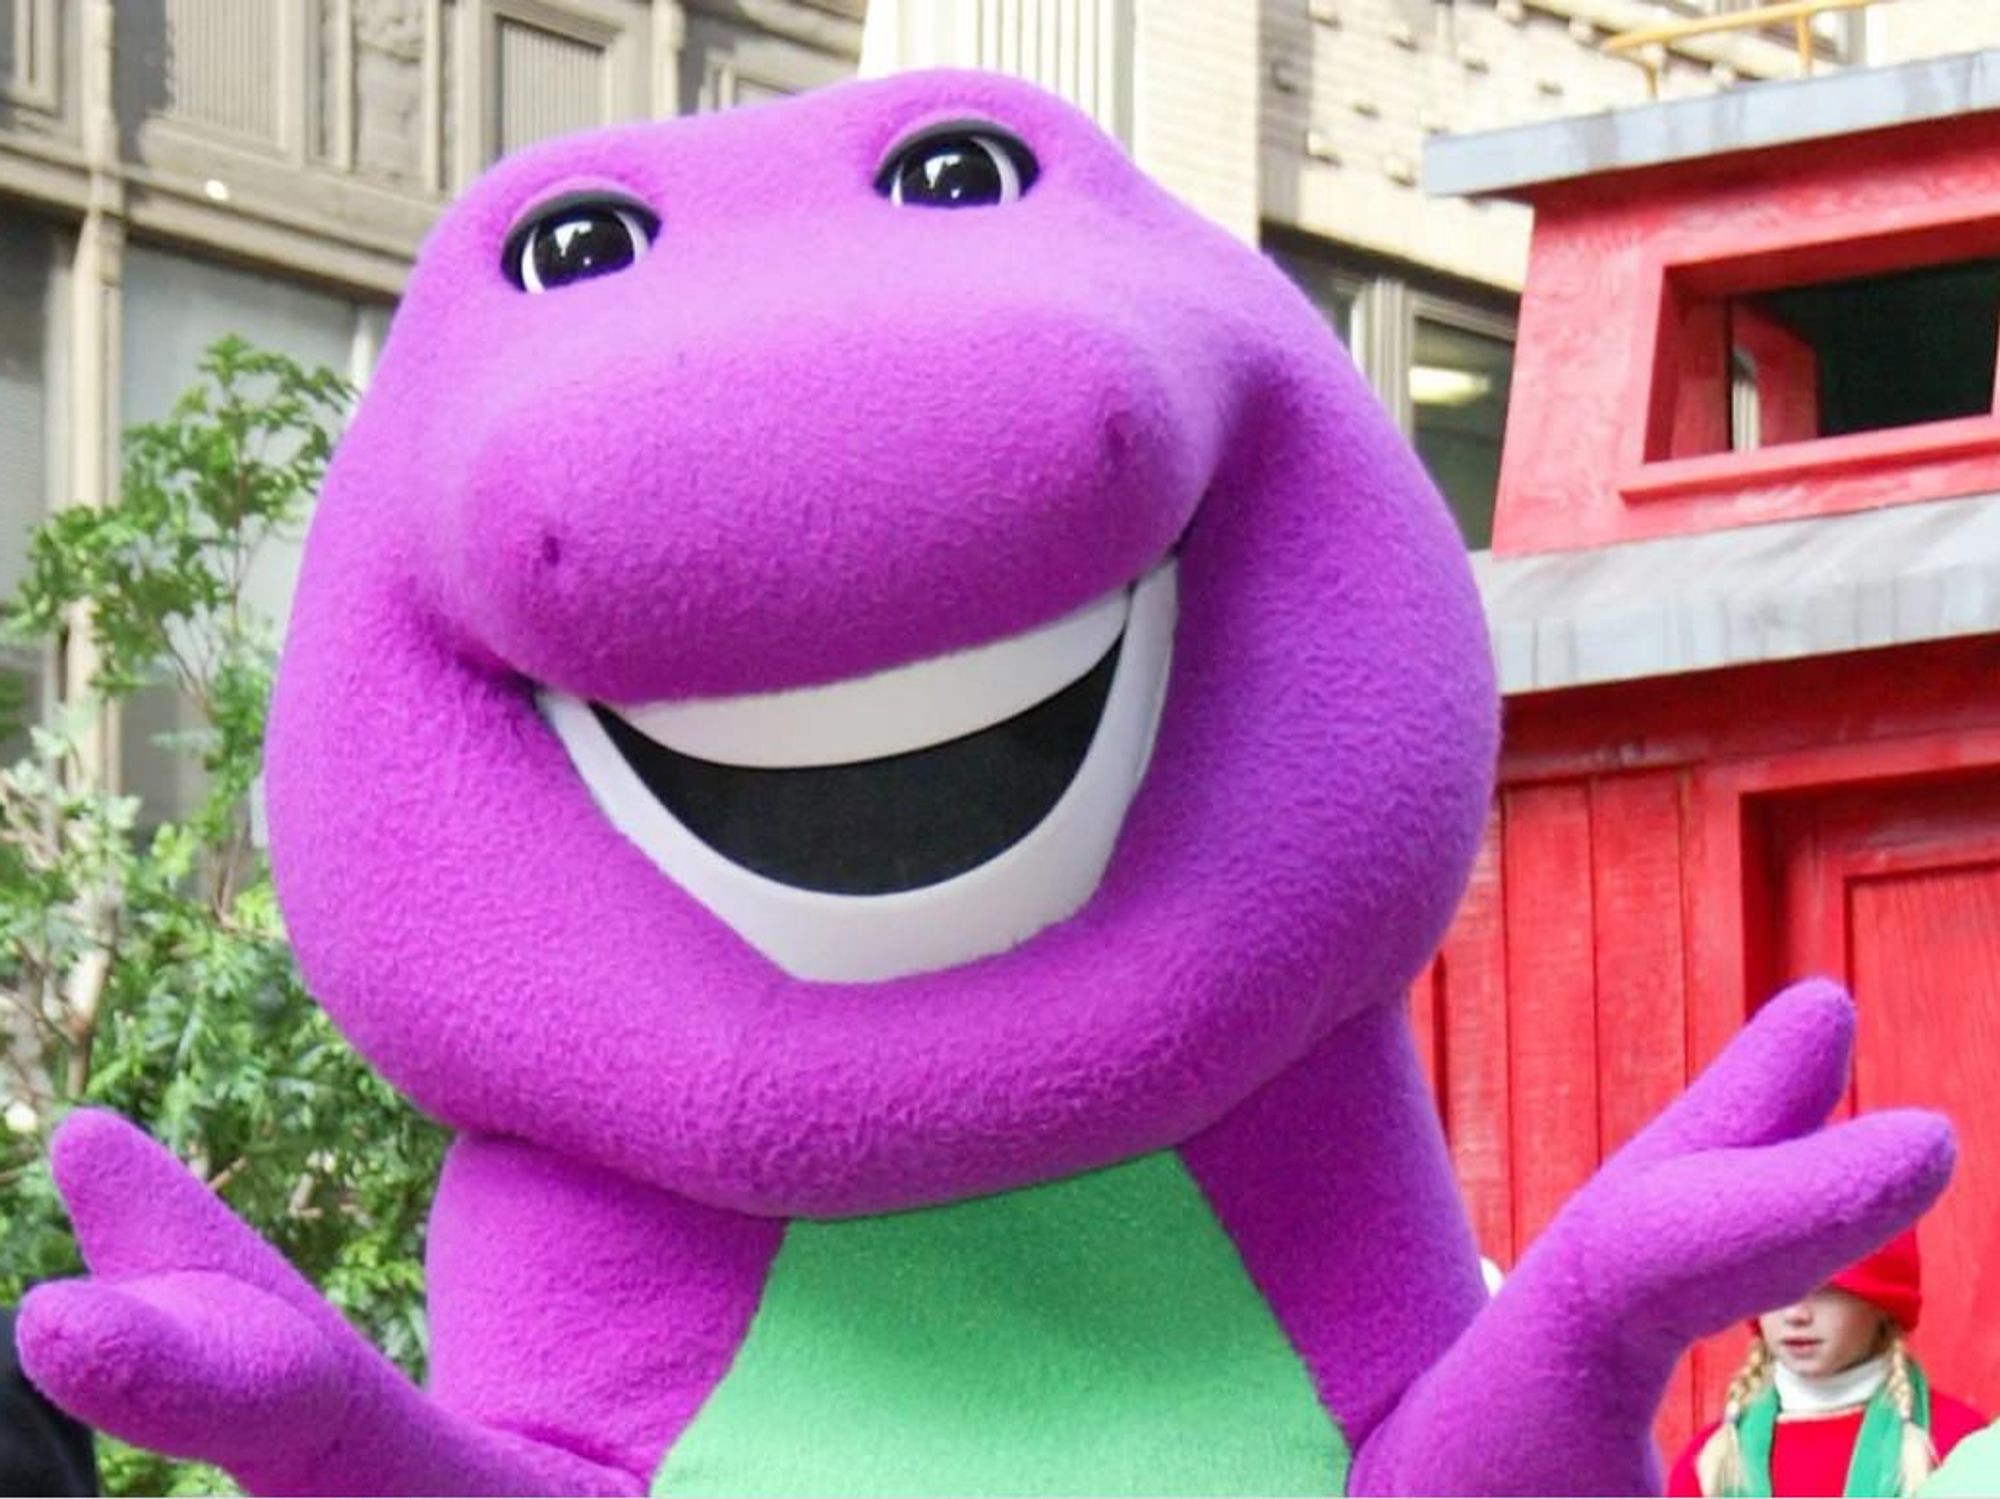 Documentary digs down on Barney, the purple dinosaur created in North Texas